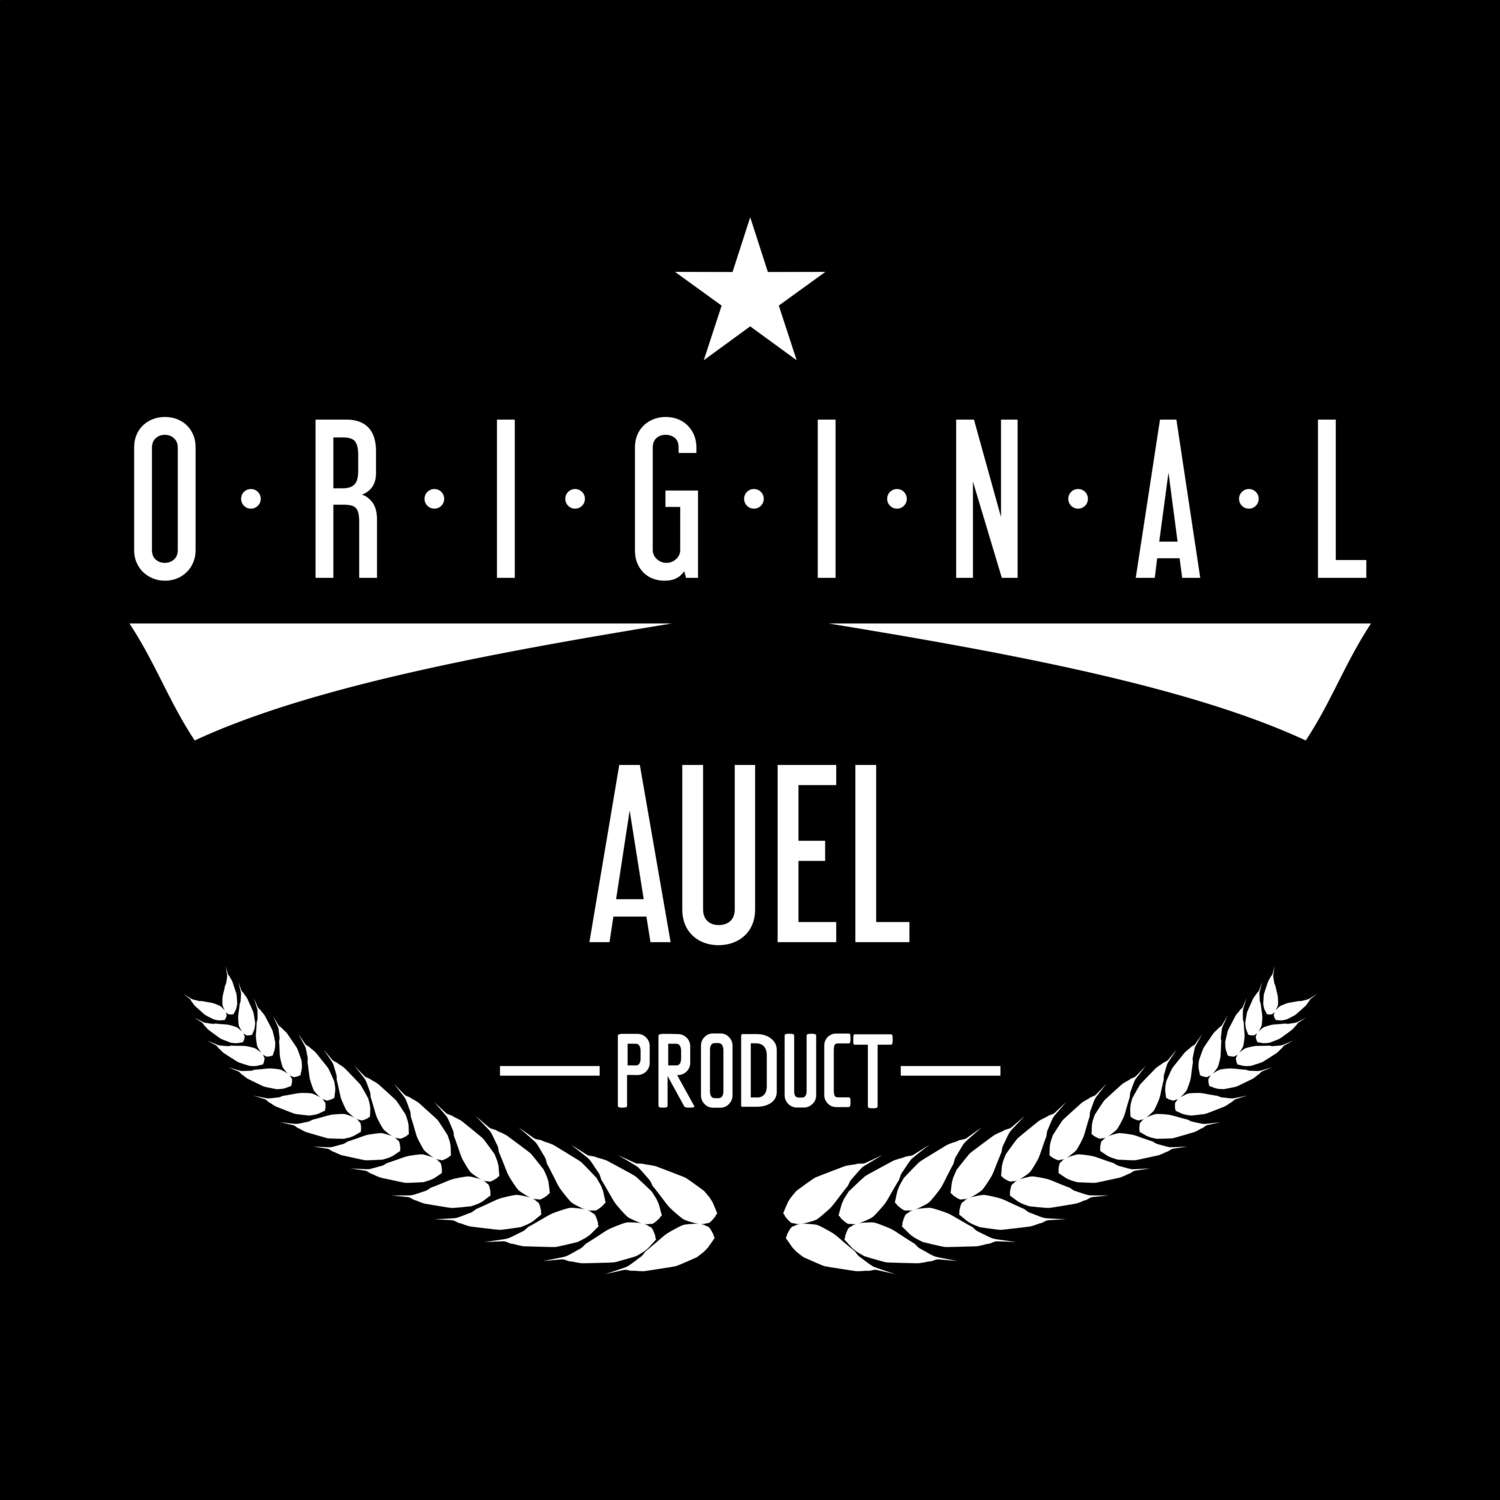 Auel T-Shirt »Original Product«